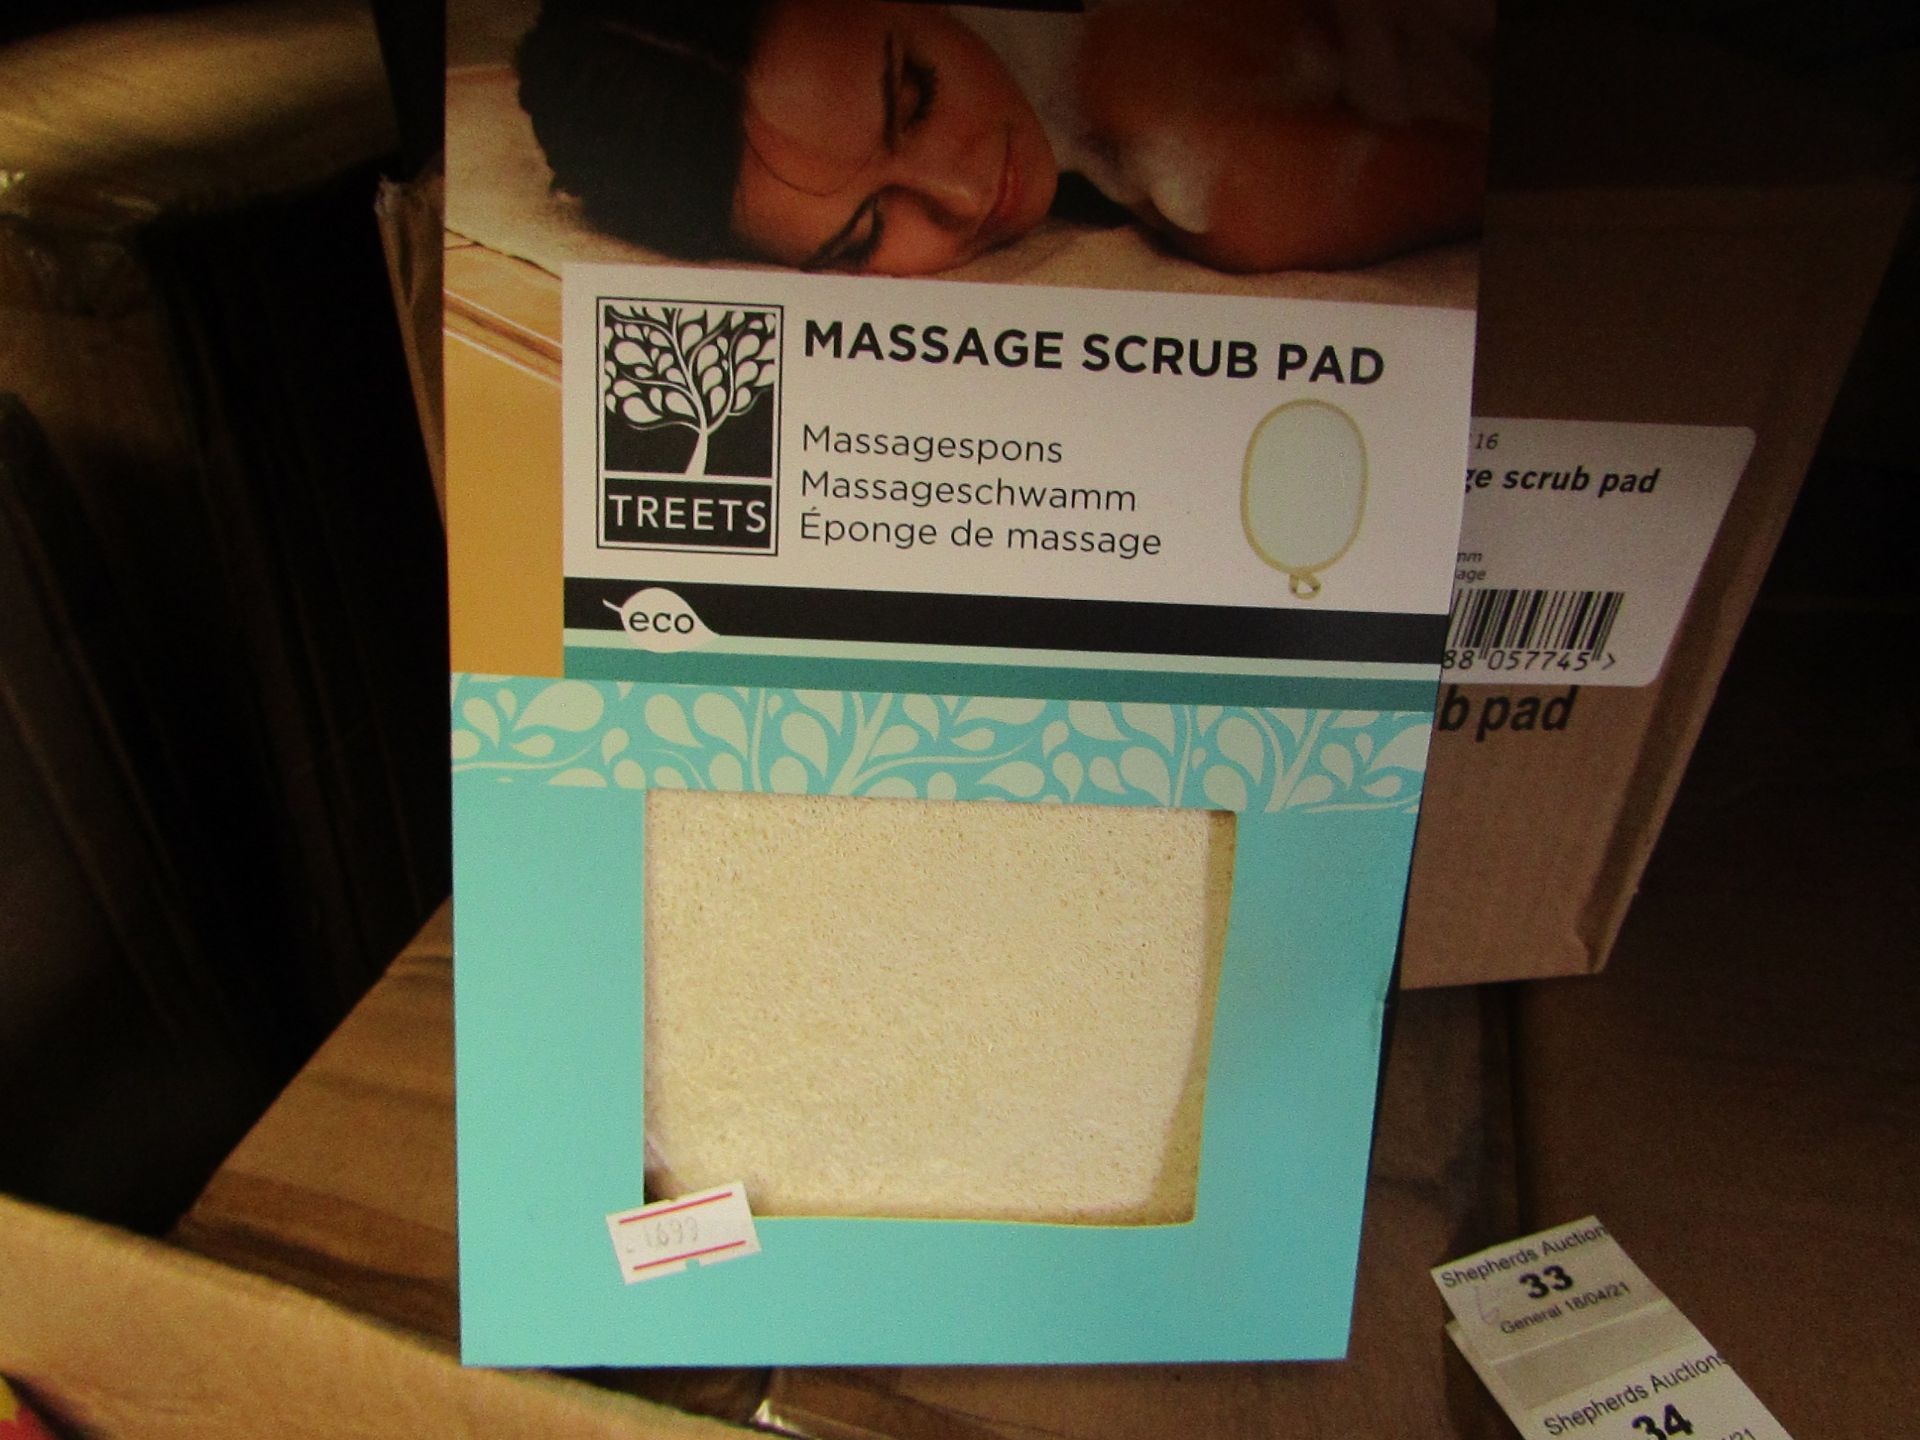 6x Massage scrub pads, new and boxed.